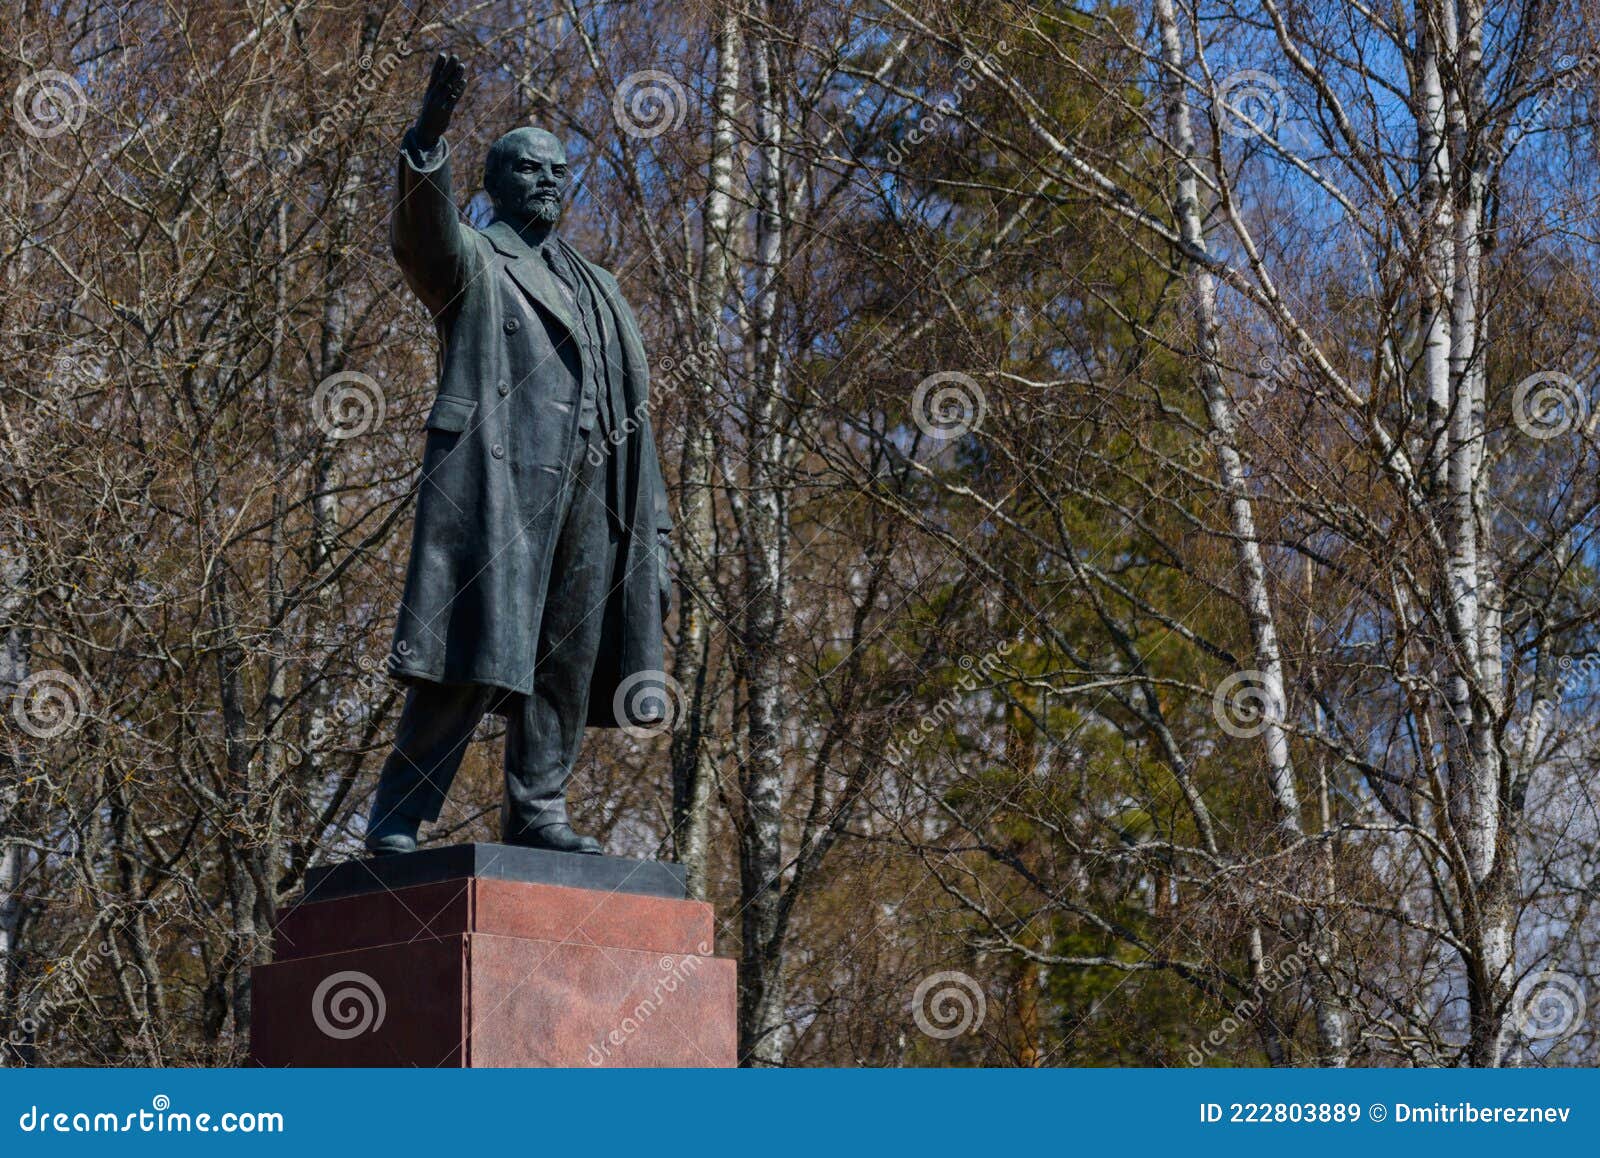 Zelenogorsk, Russia, May 9, 2021-Monument To Lenin On Lenin Avenue In